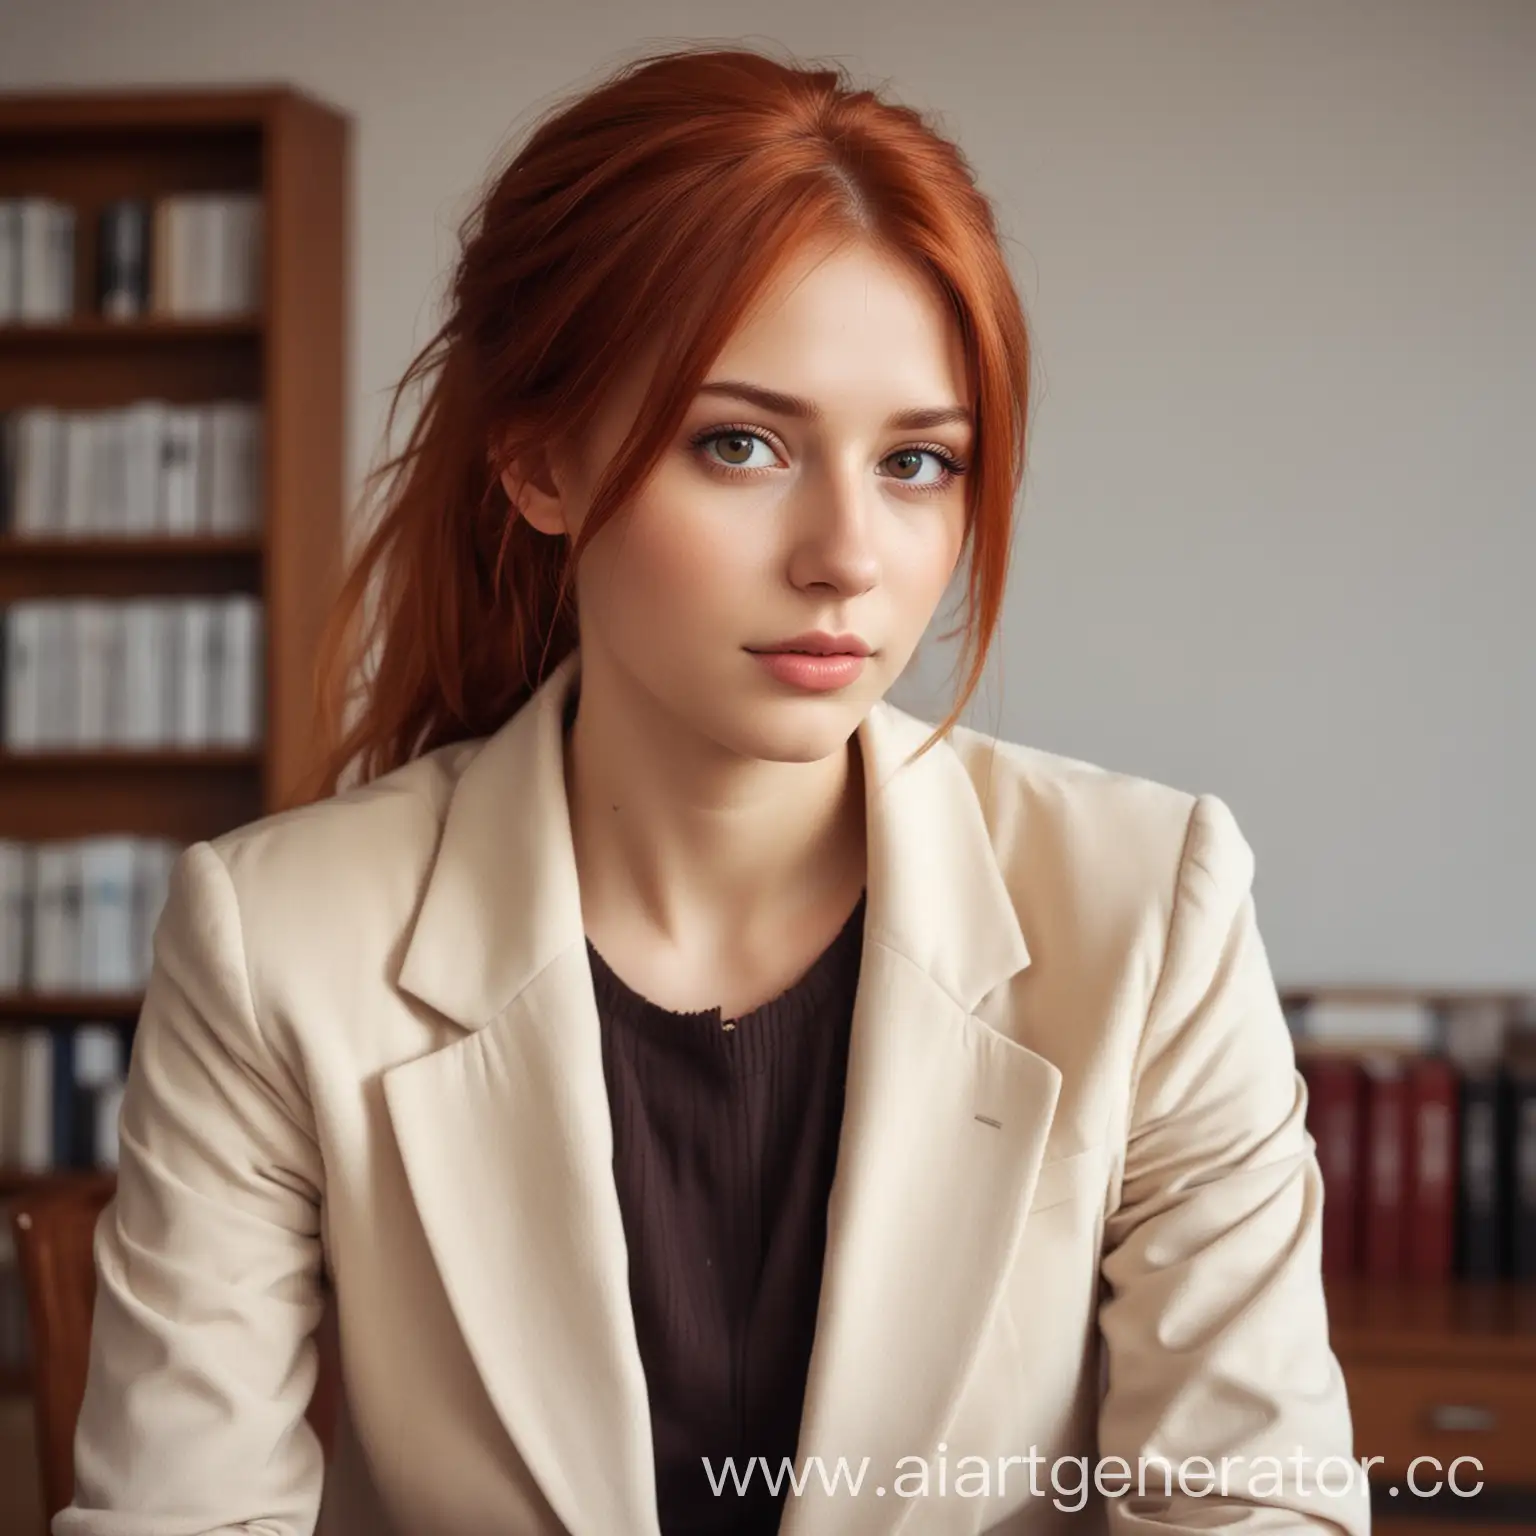 Slavic-Girl-in-MilkColored-Blazer-Office-Elegance-with-BrownEyed-Charm